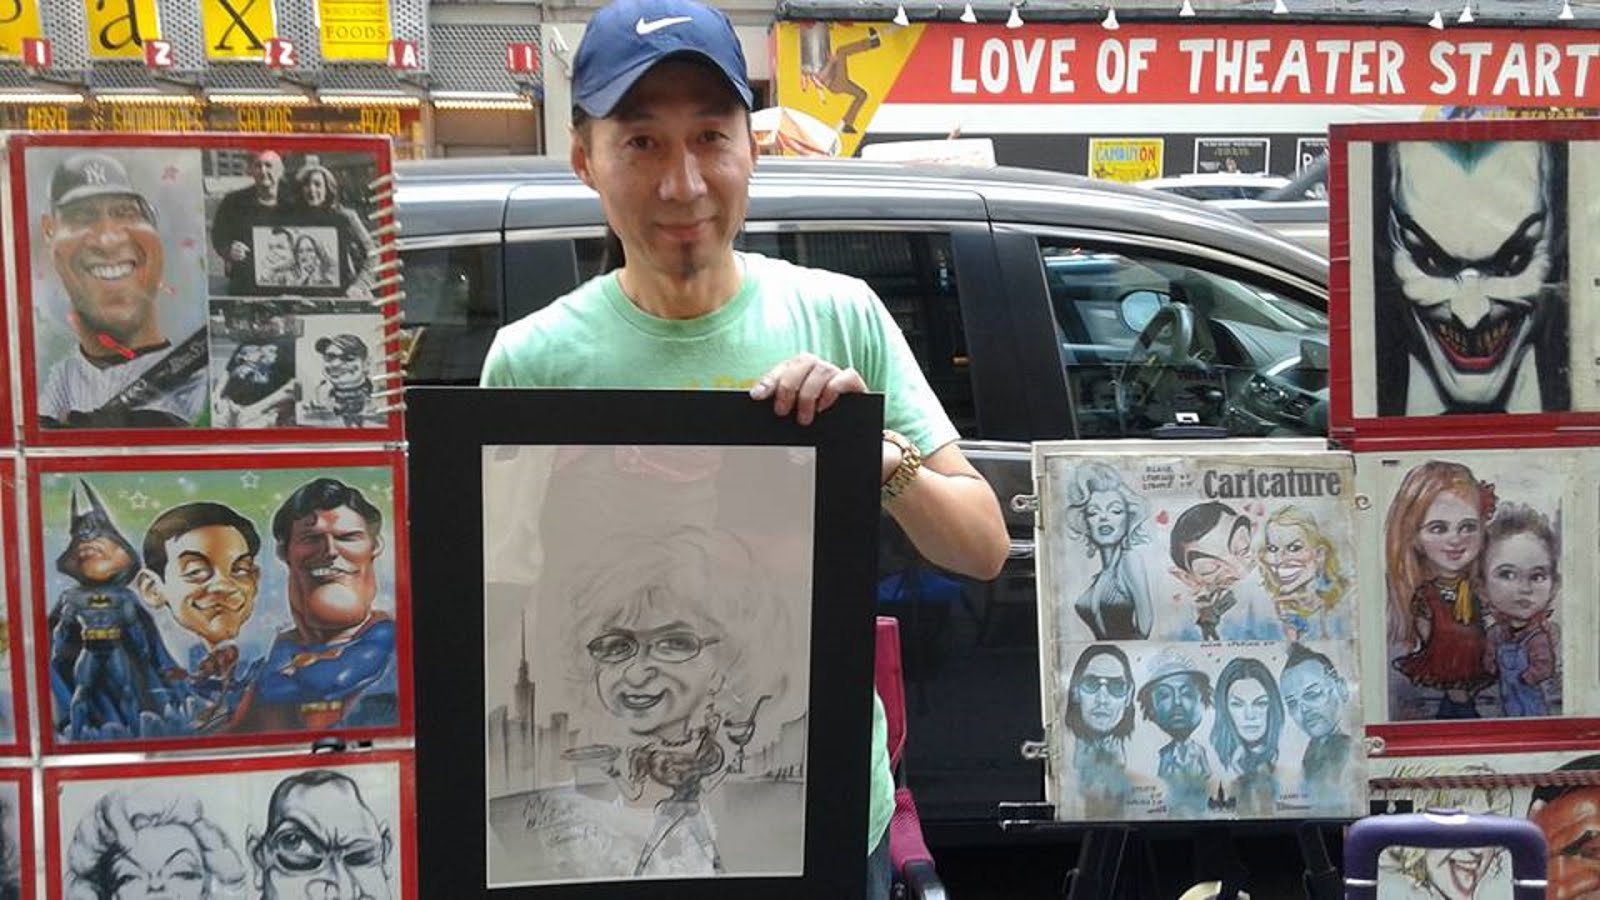 Quan Li  Great Caricature Artist Near Times Square